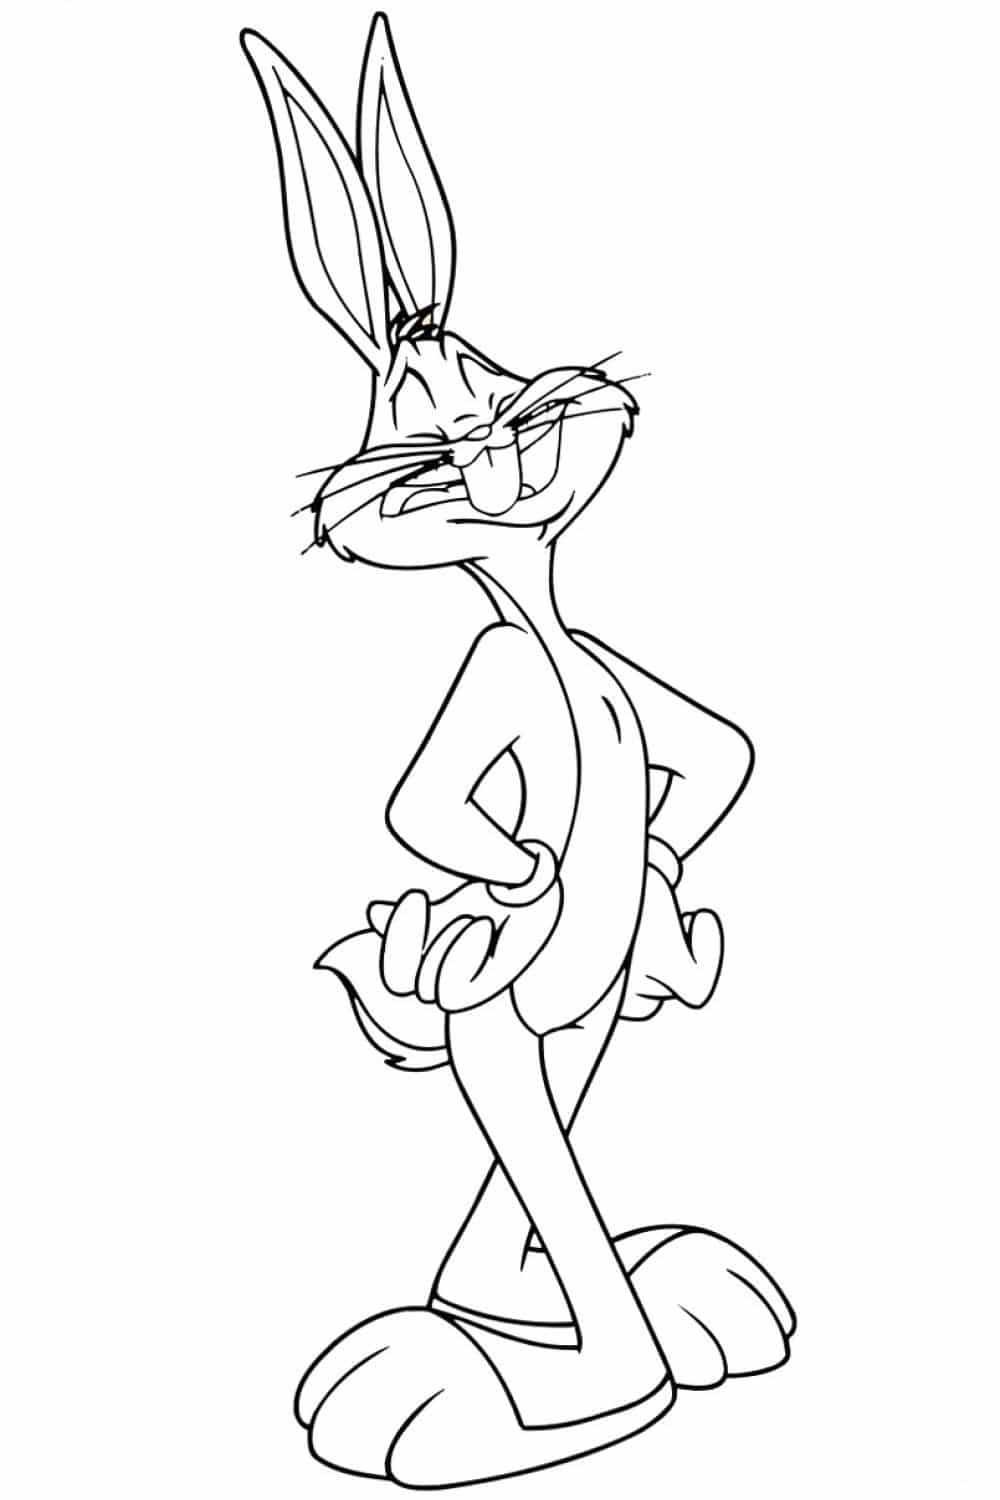 Bugs Bunny walking in the street